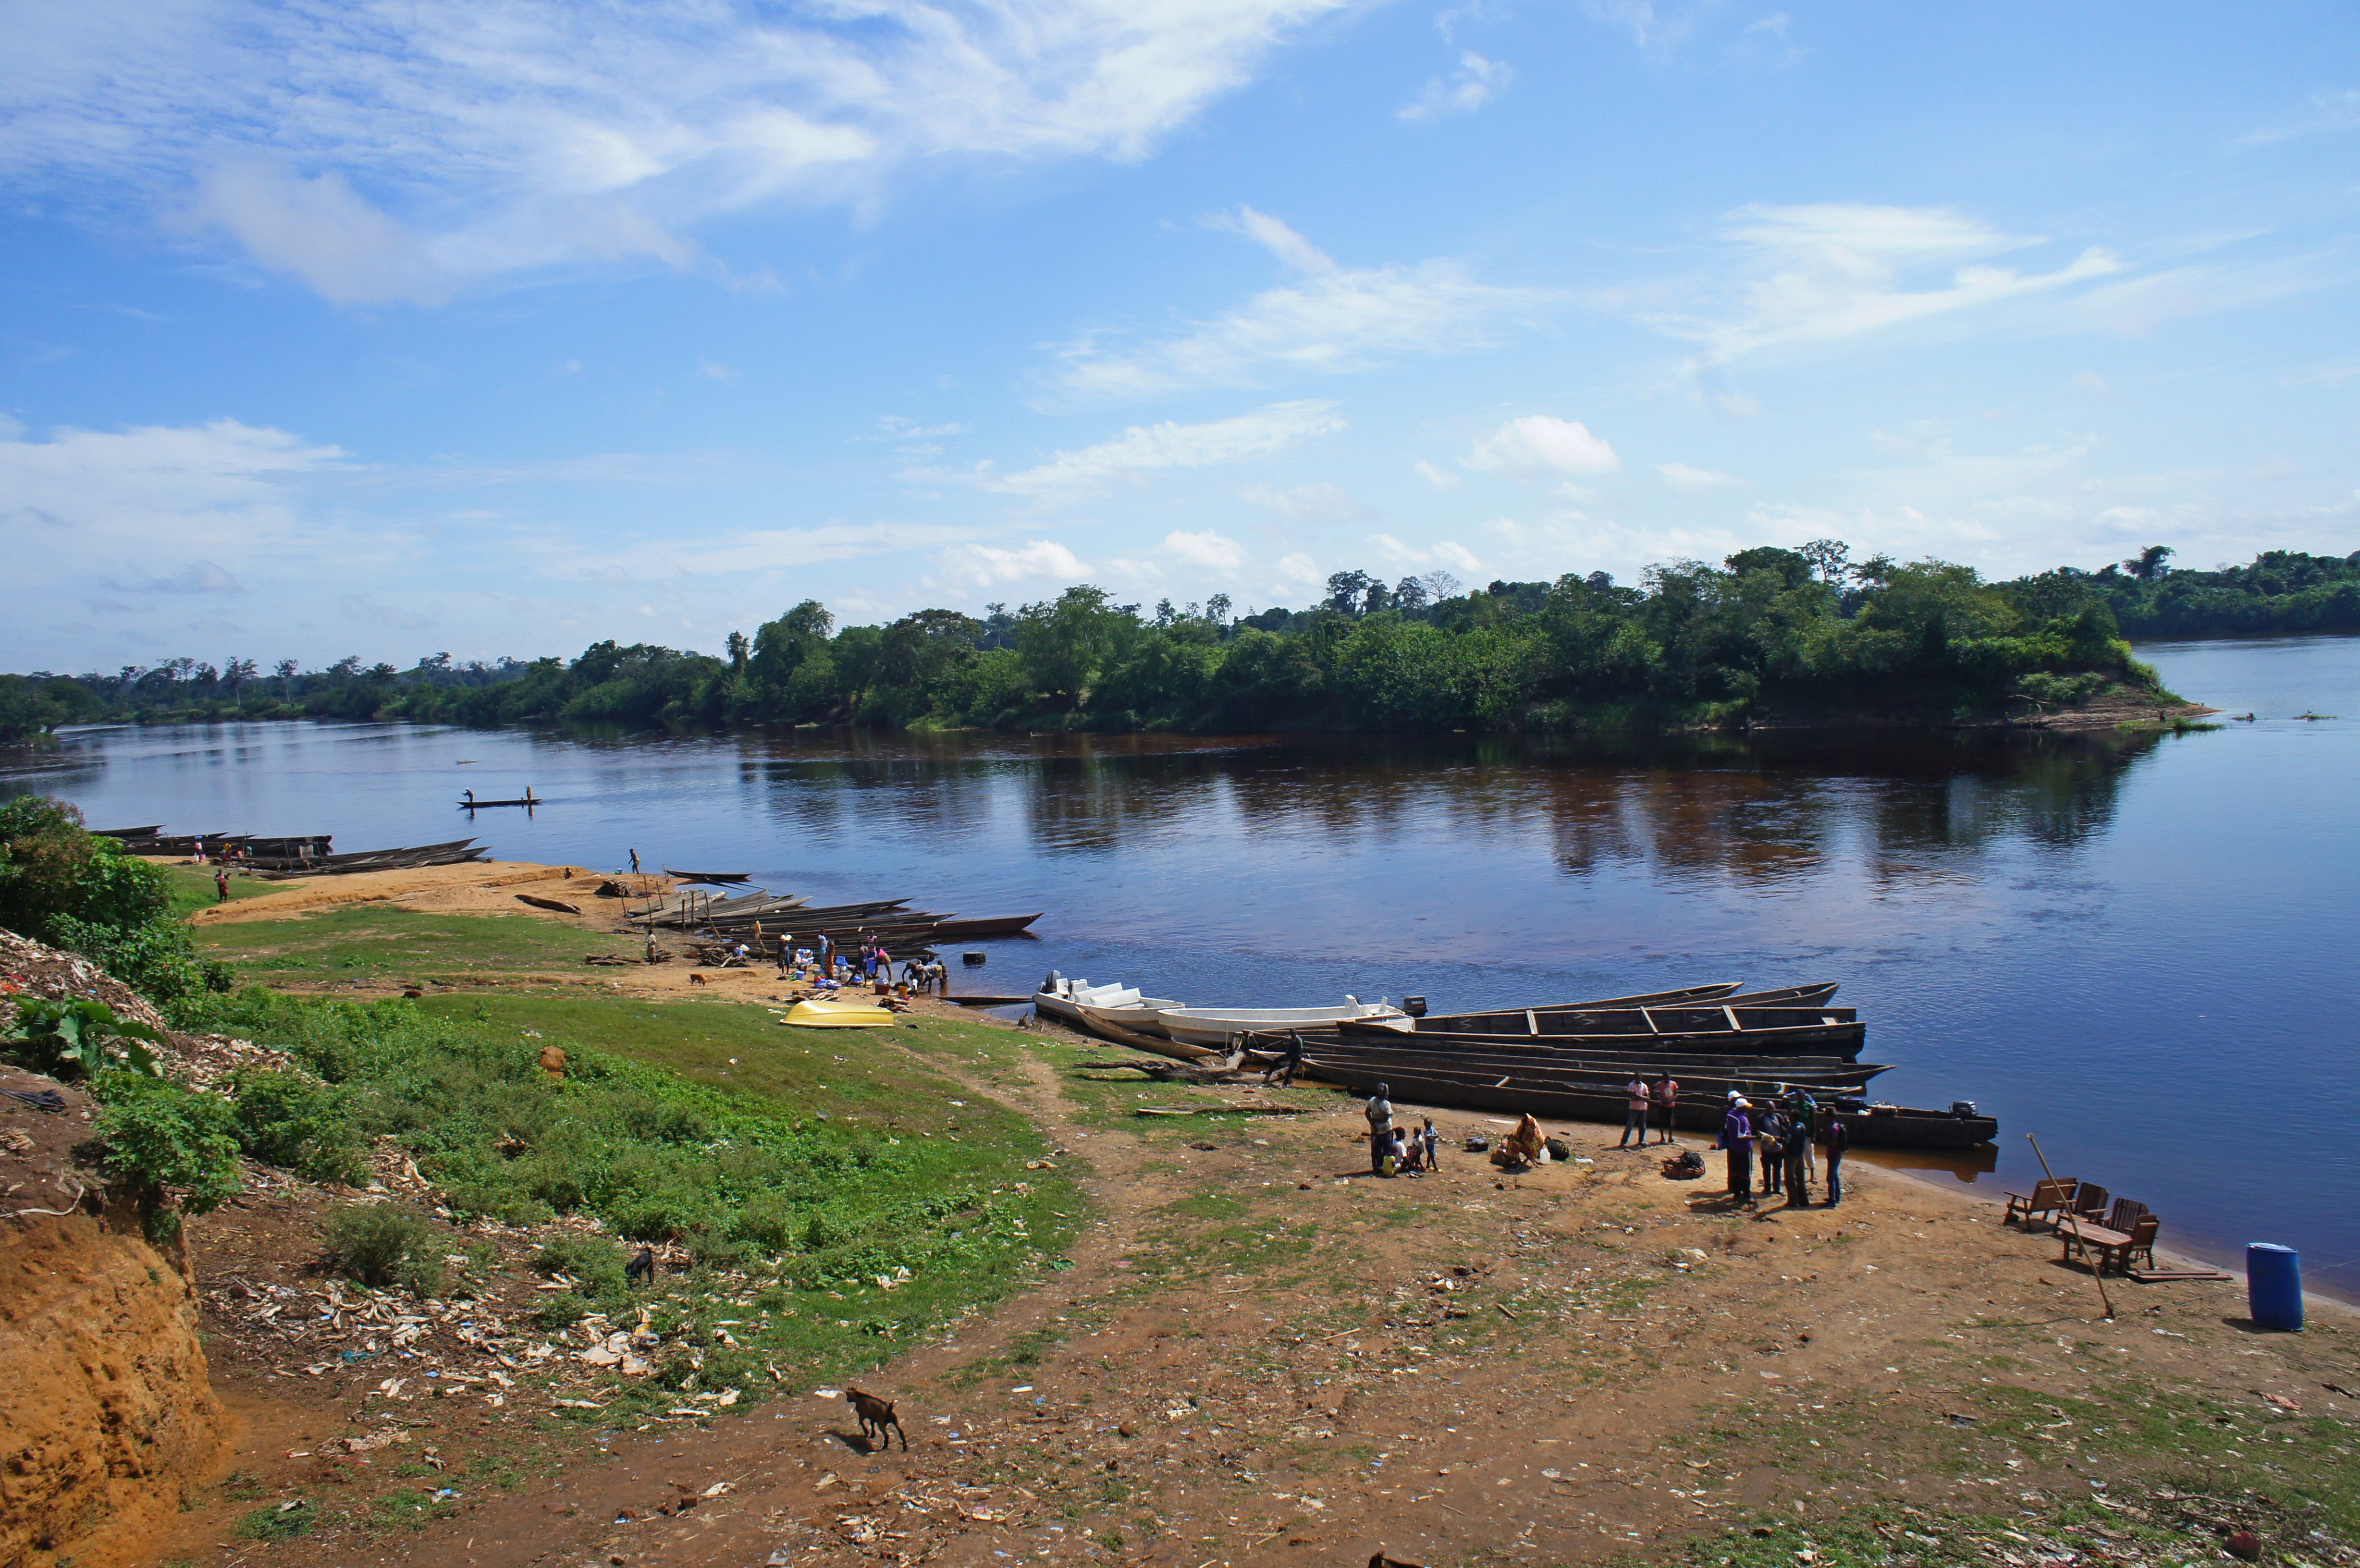 The Congo river in Dongou, Likouala district. Image by Alexandra Tyukavina/Shutterstock. Republic of the Congo (Congo Brazzaville), 2014.